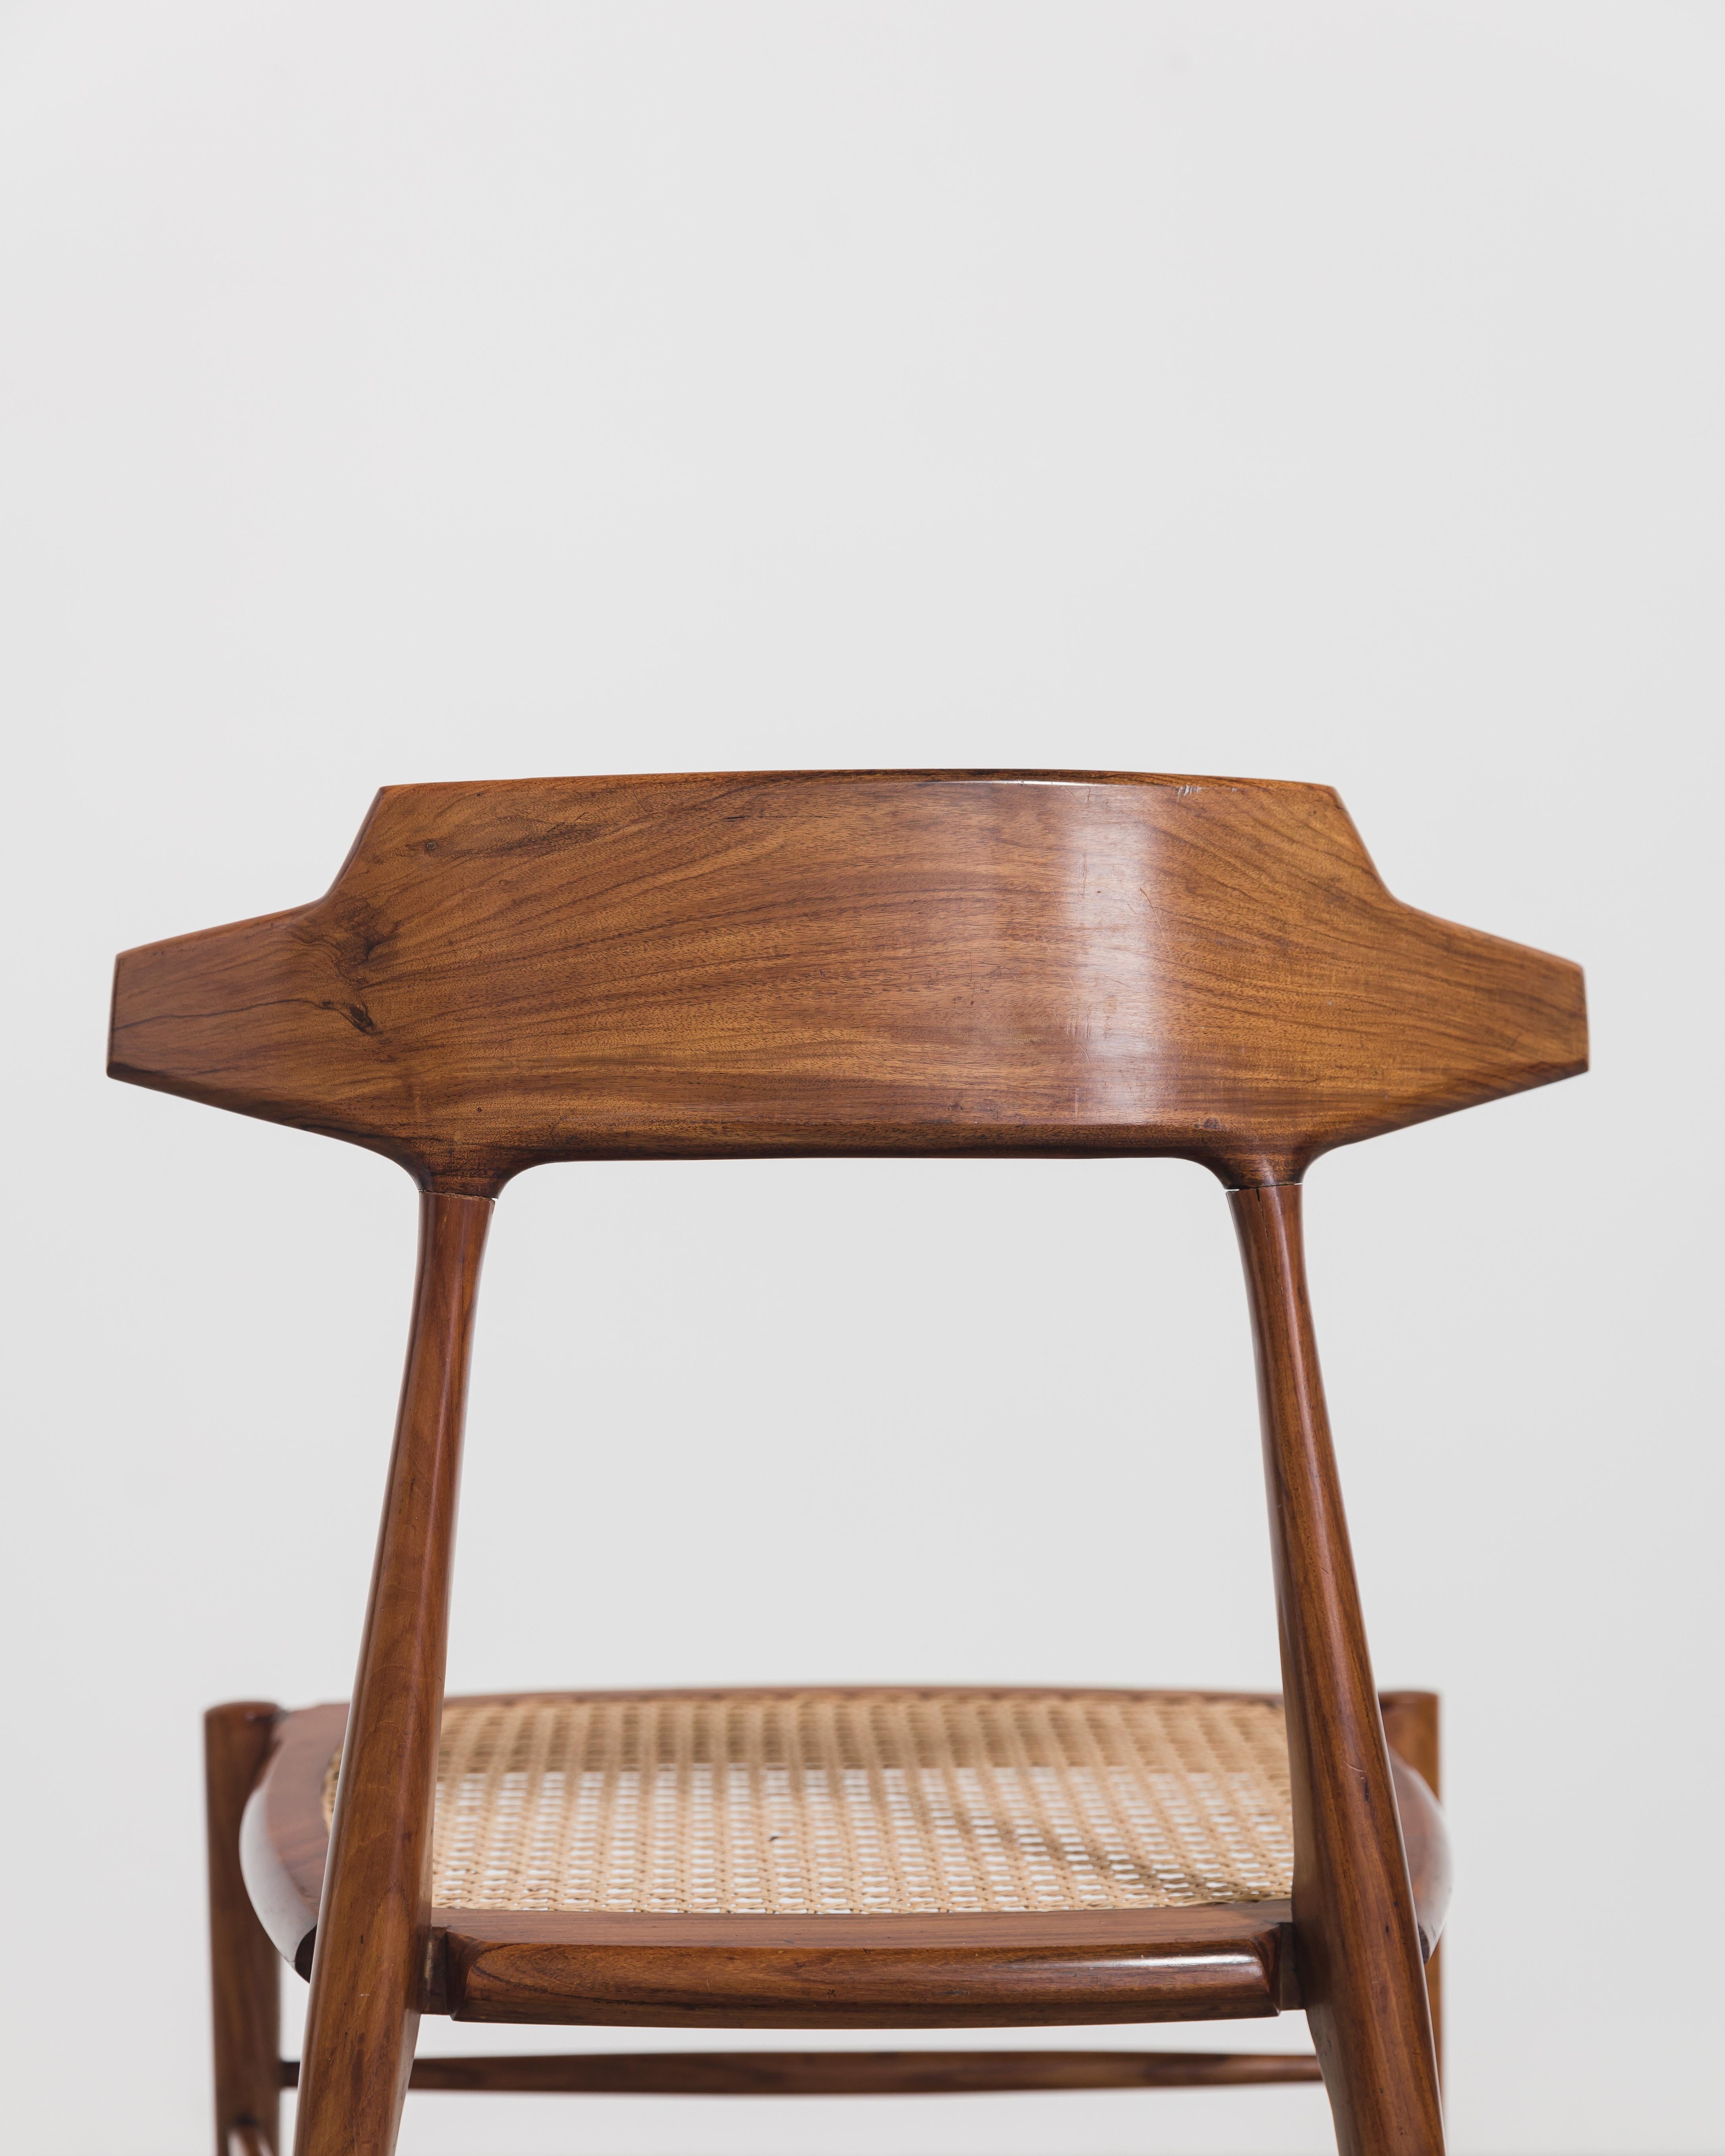 Ernesto Hauner Caviuna Chair, Brazilian Midcentury Design, 1950 In Excellent Condition For Sale In New York, NY